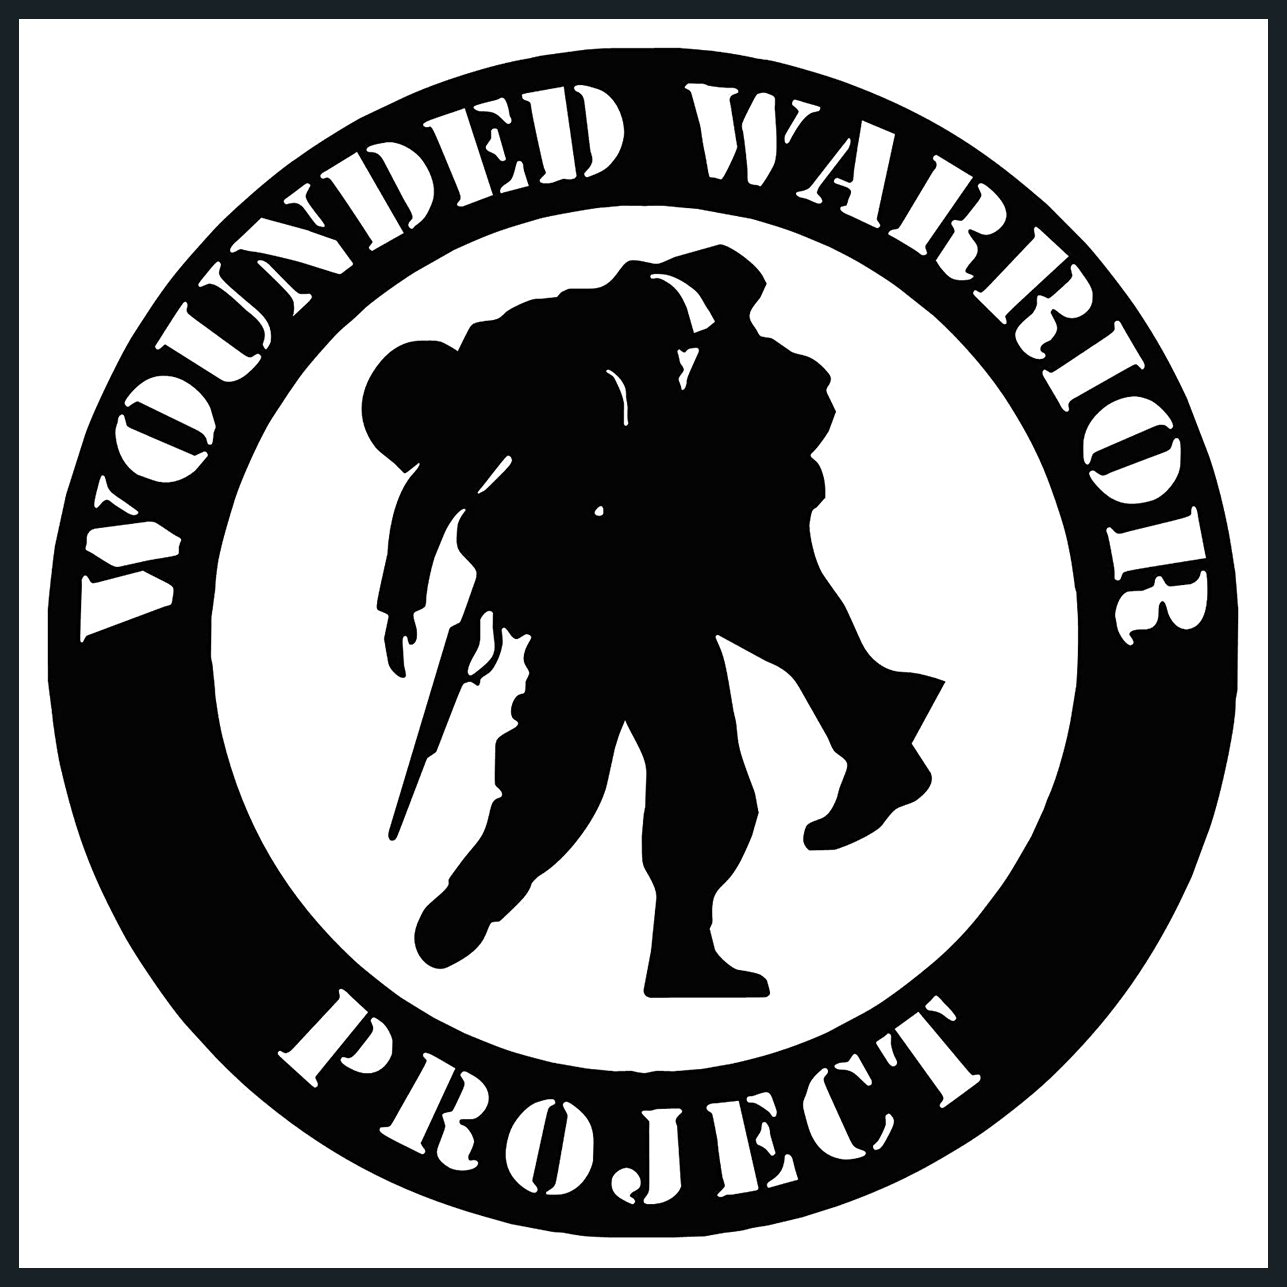 bsm wounded warrior copy.jpg